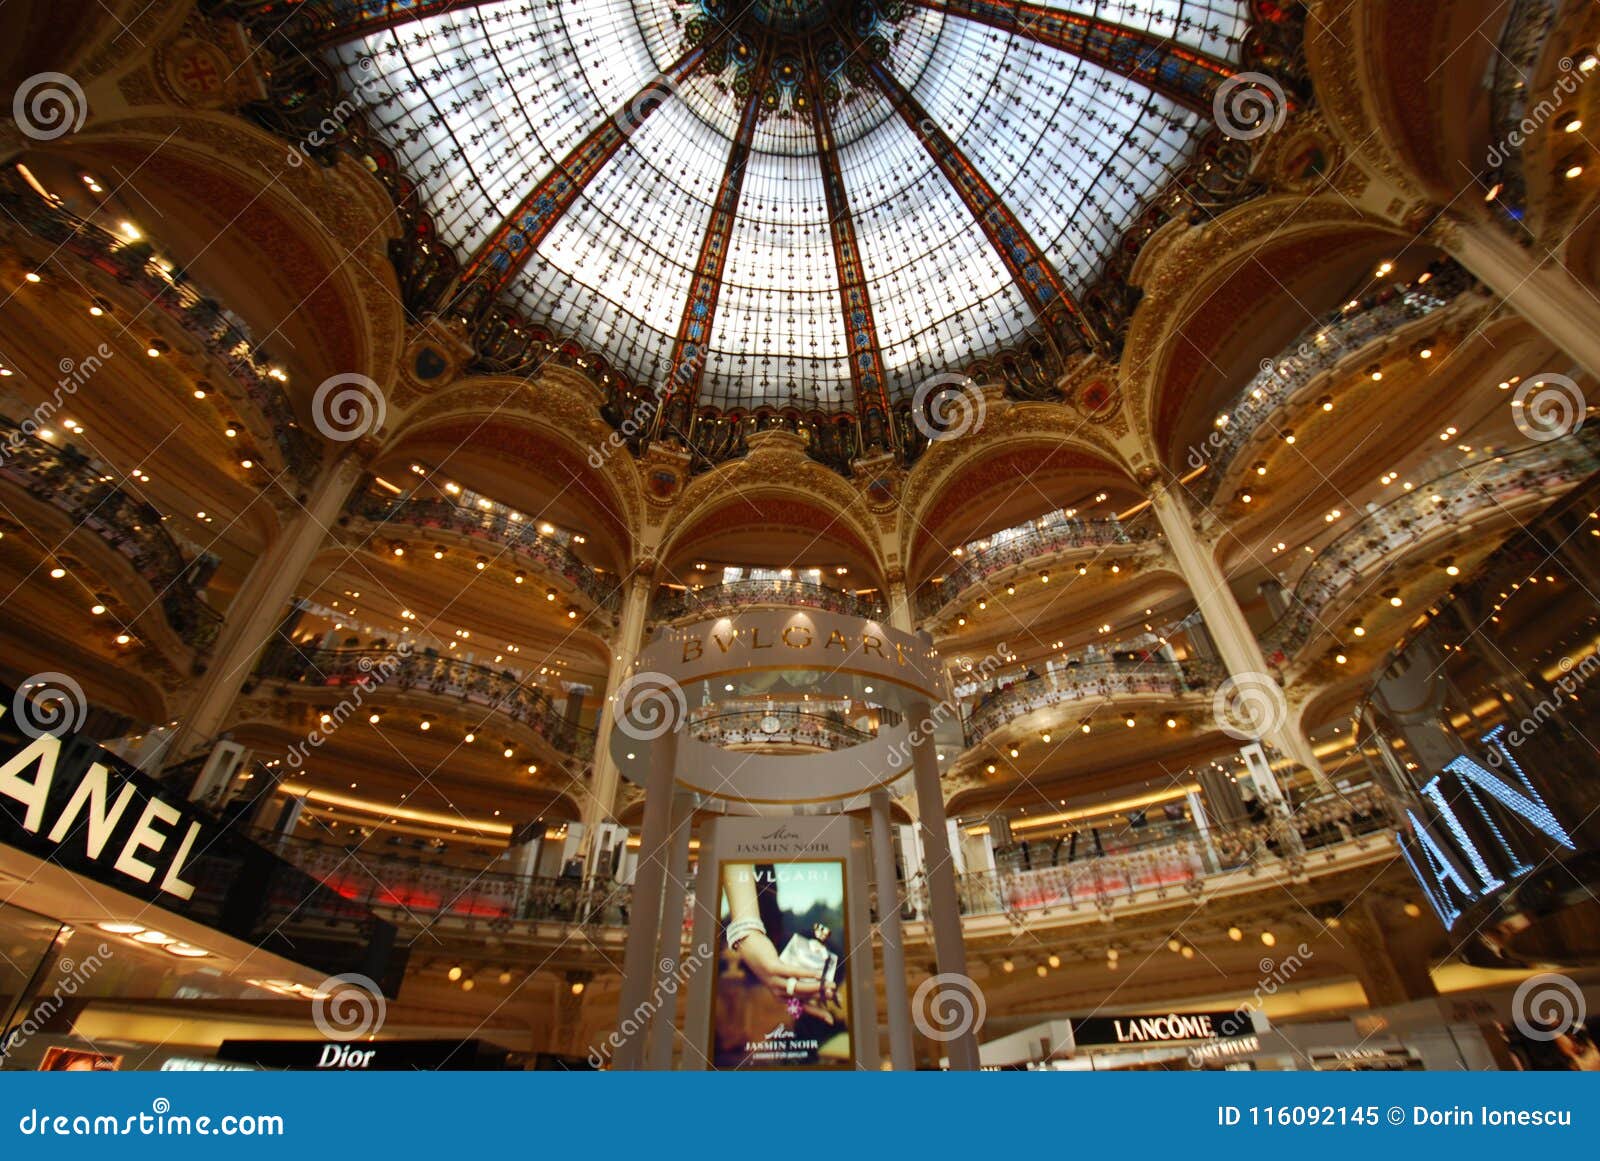 Galeries Lafayette Store Landmark Ceiling Tourist Attraction